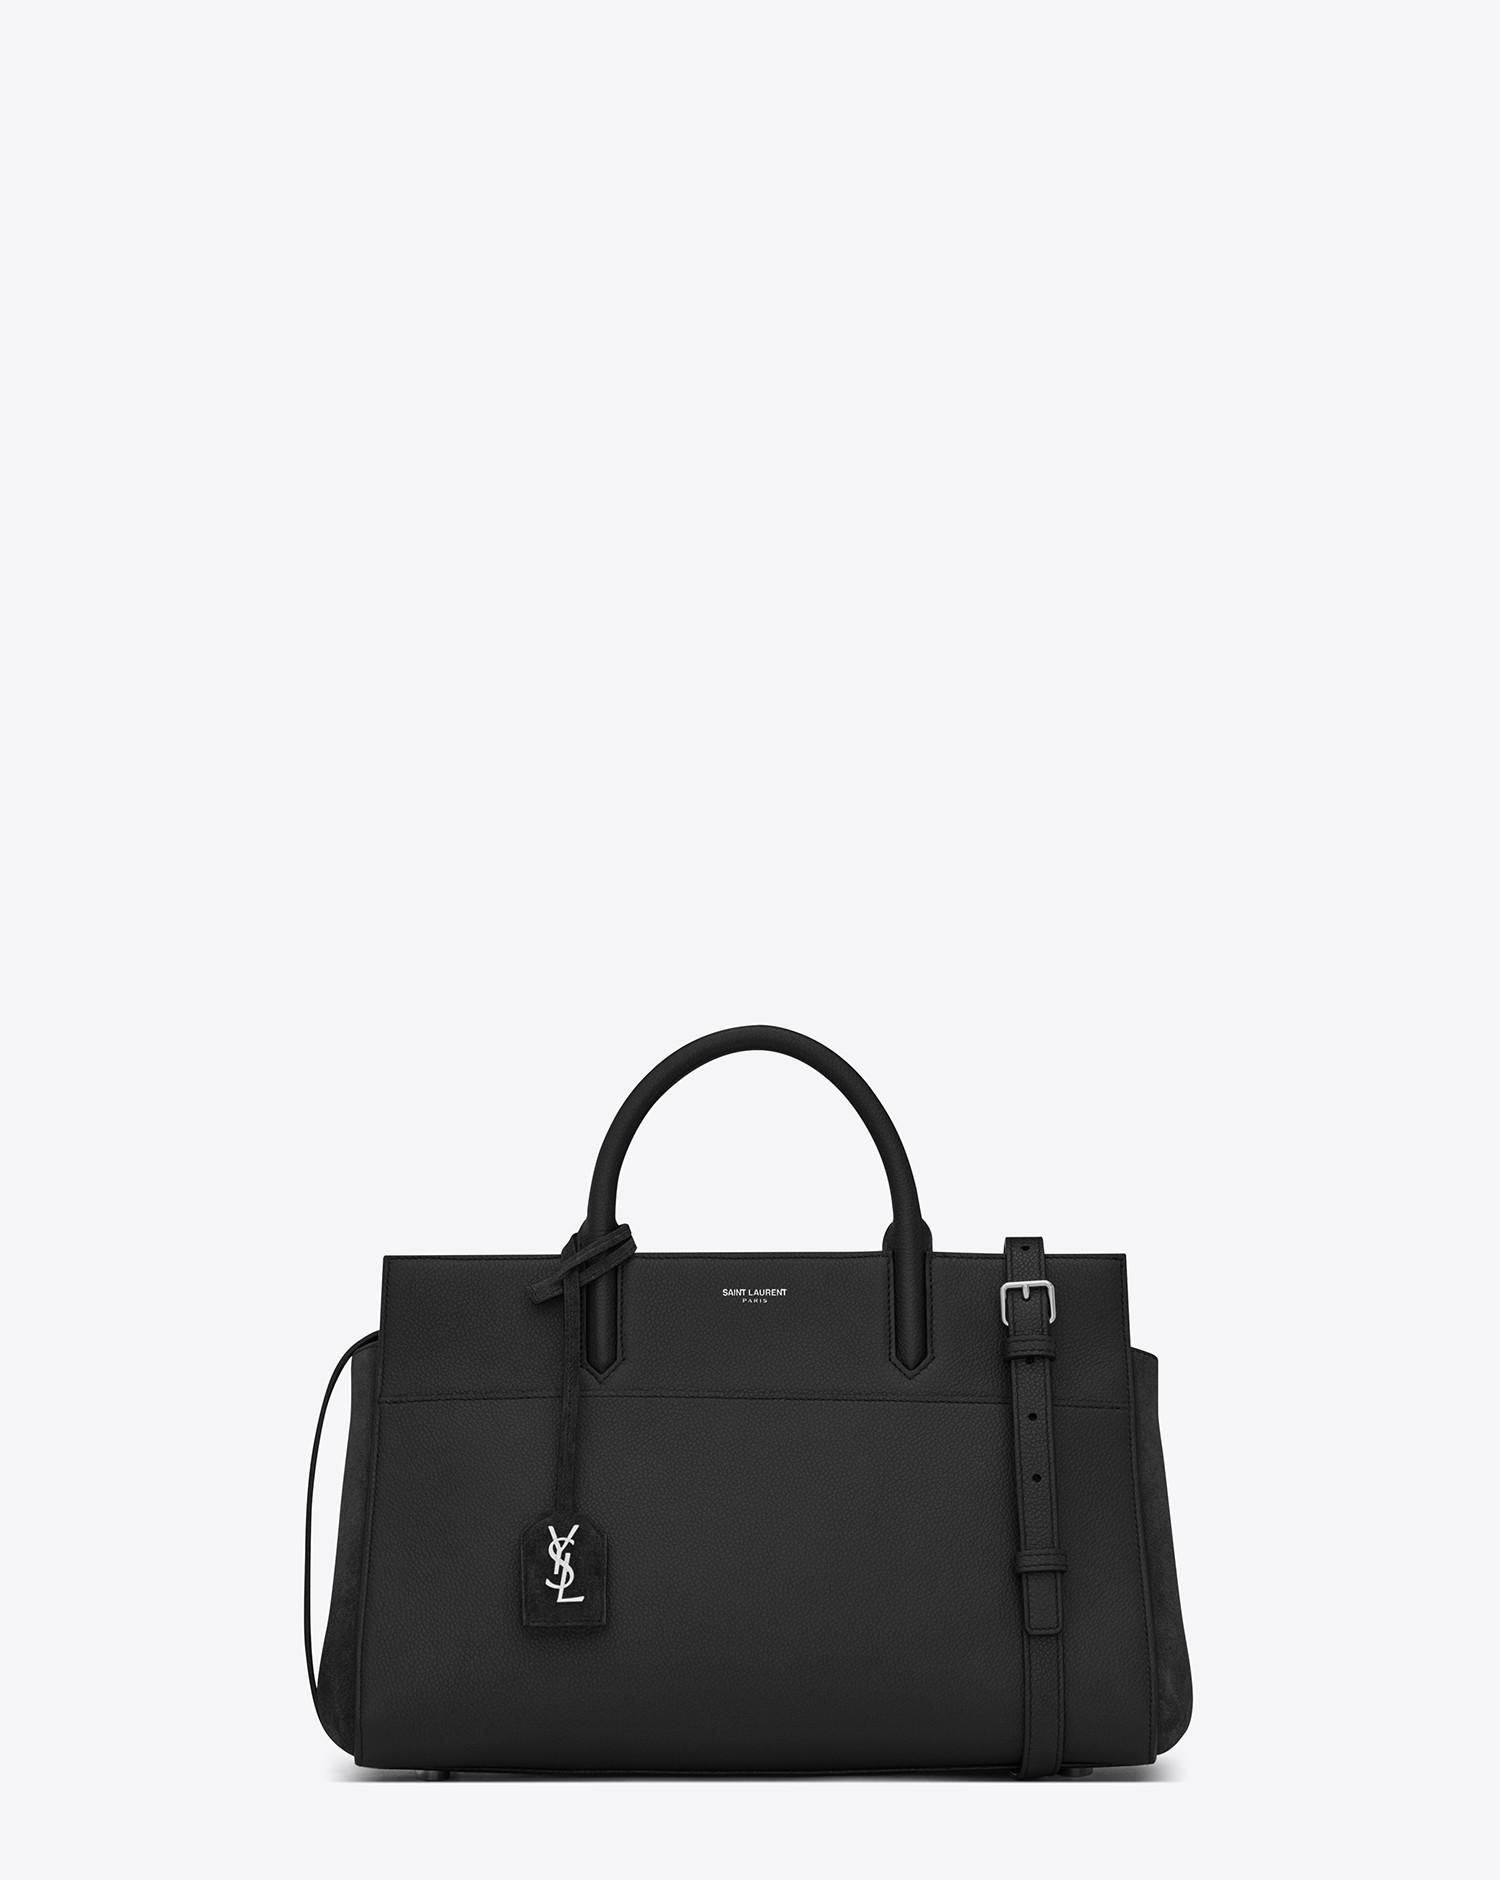 Saint Laurent Small Cabas Bag in Black